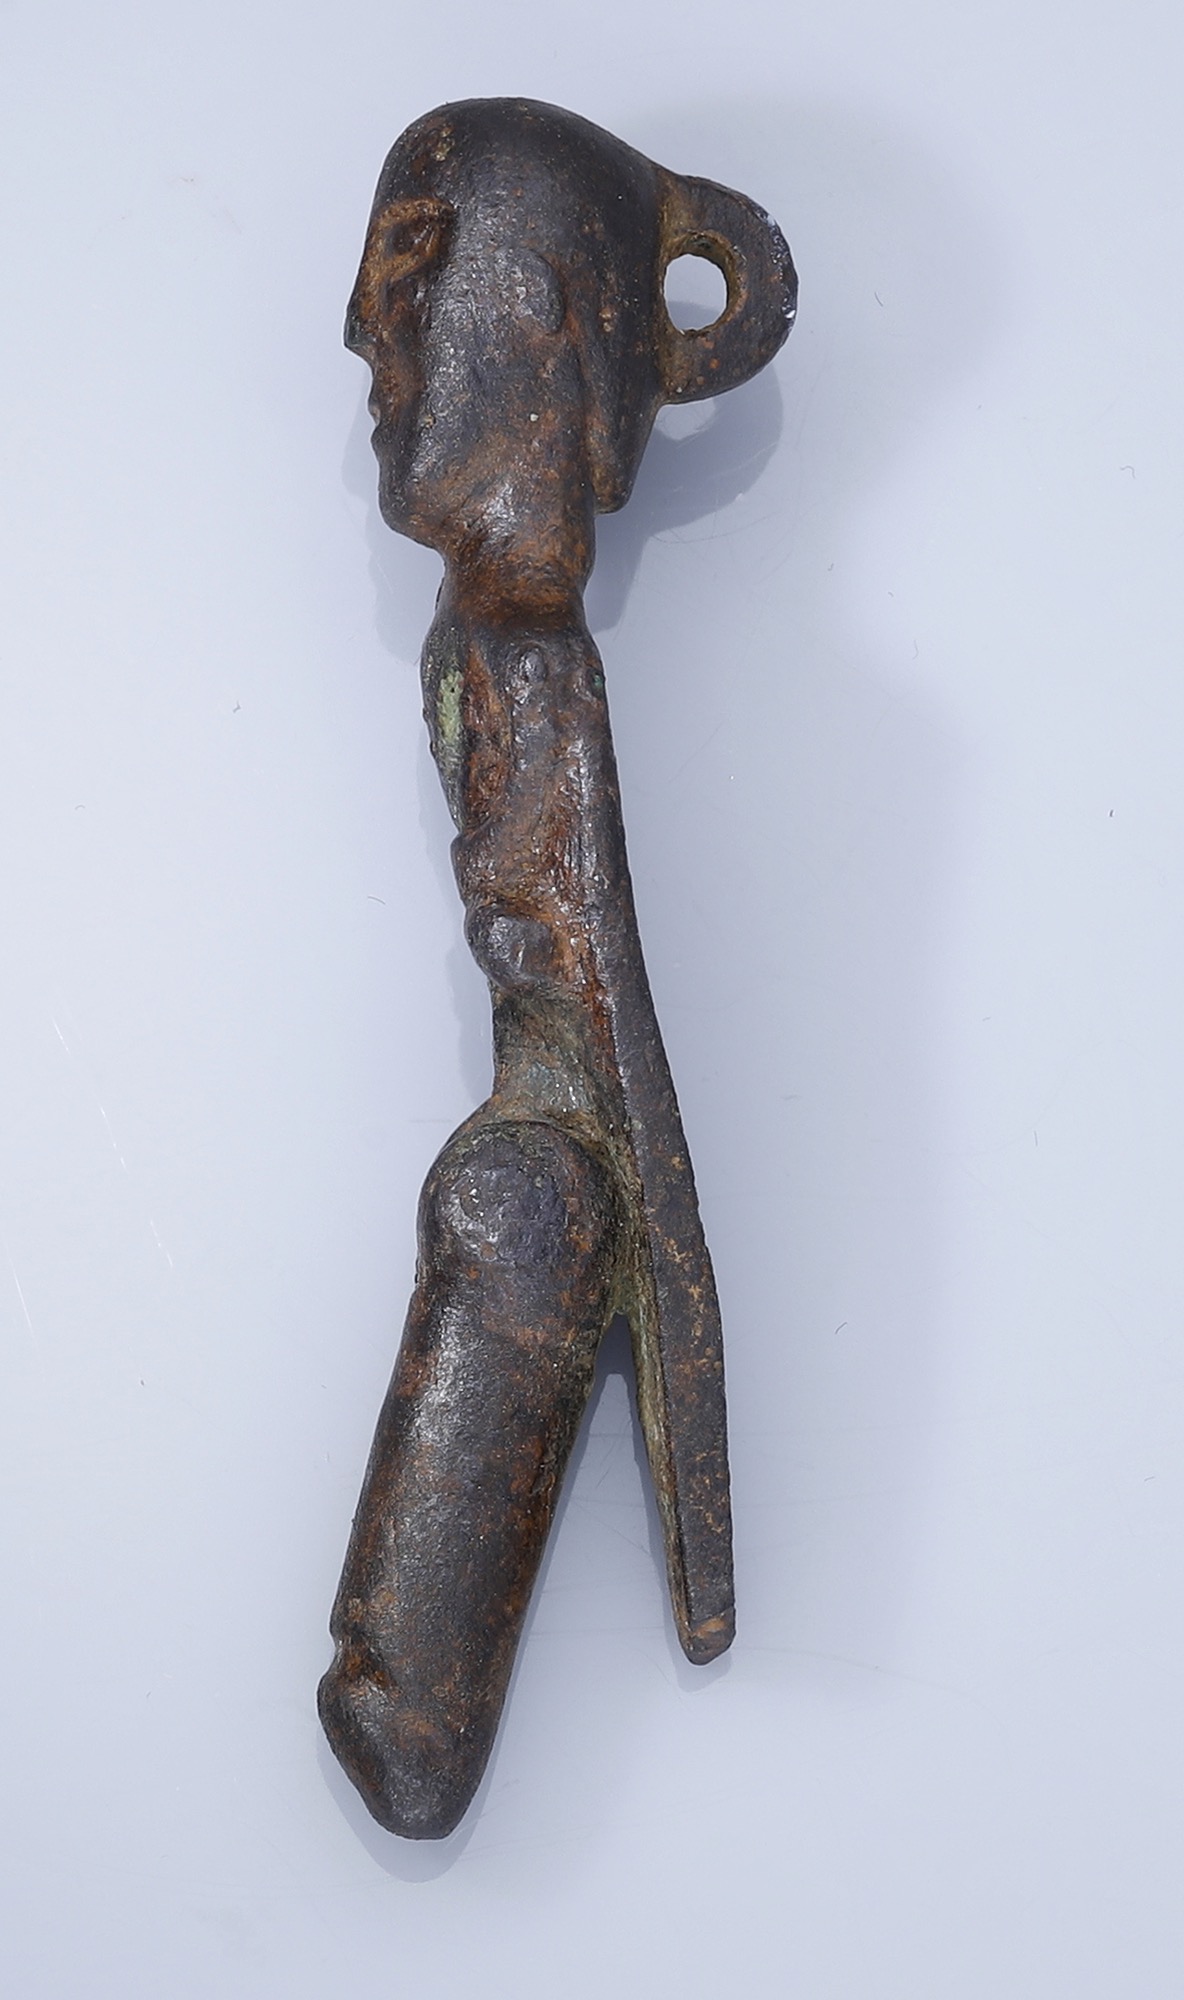 Detectorist finds unique Celtic figurine with giant moving penis